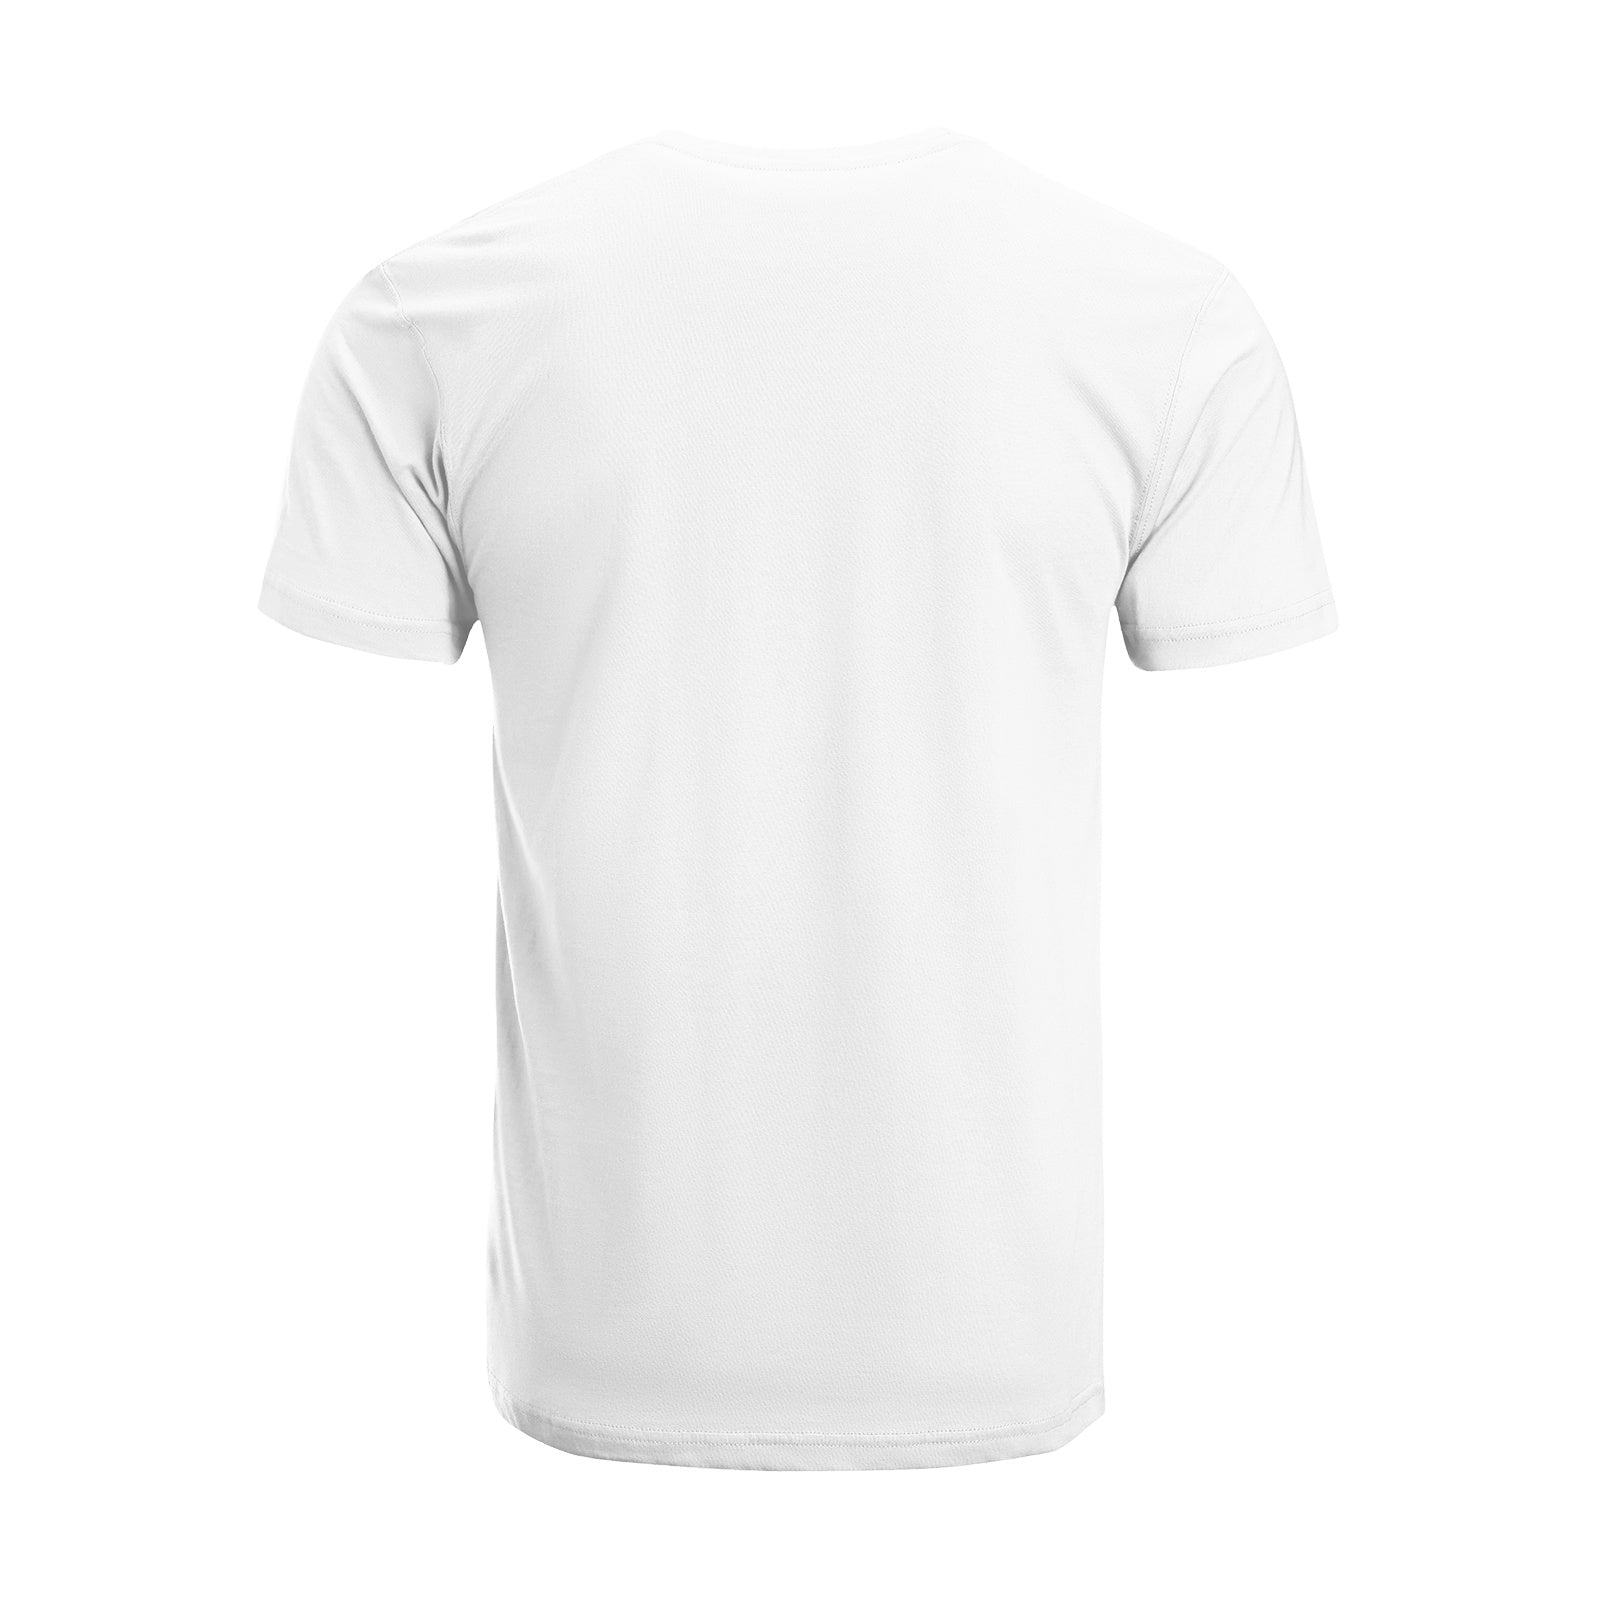 Unisex Short Sleeve Crew Neck Cotton Jersey T-Shirt CAT 13 - Tara-Outfits.com